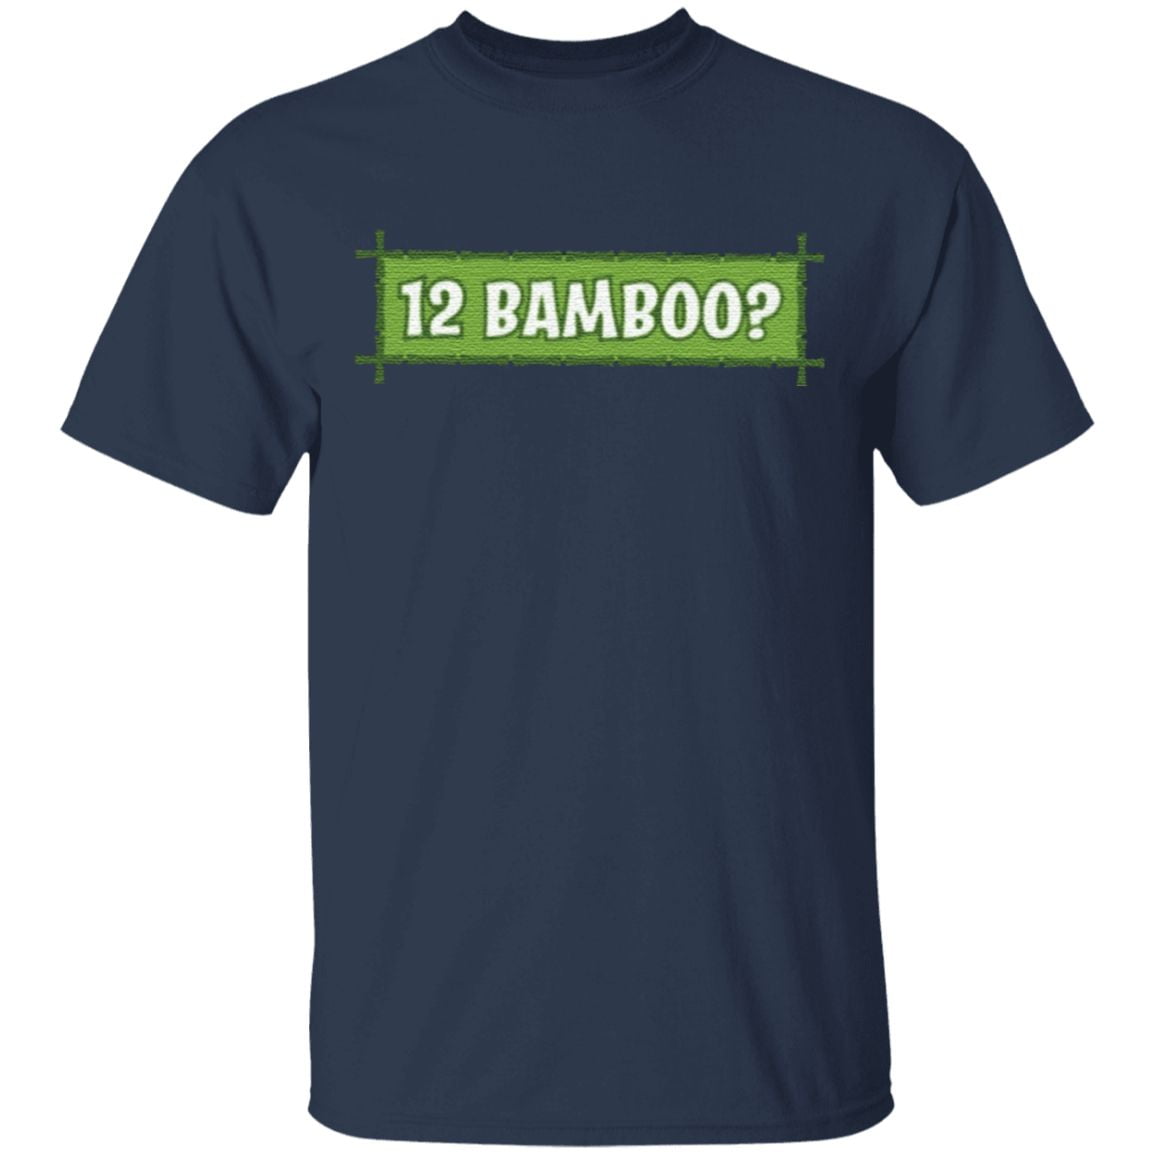 12 bamboo gift t shirt